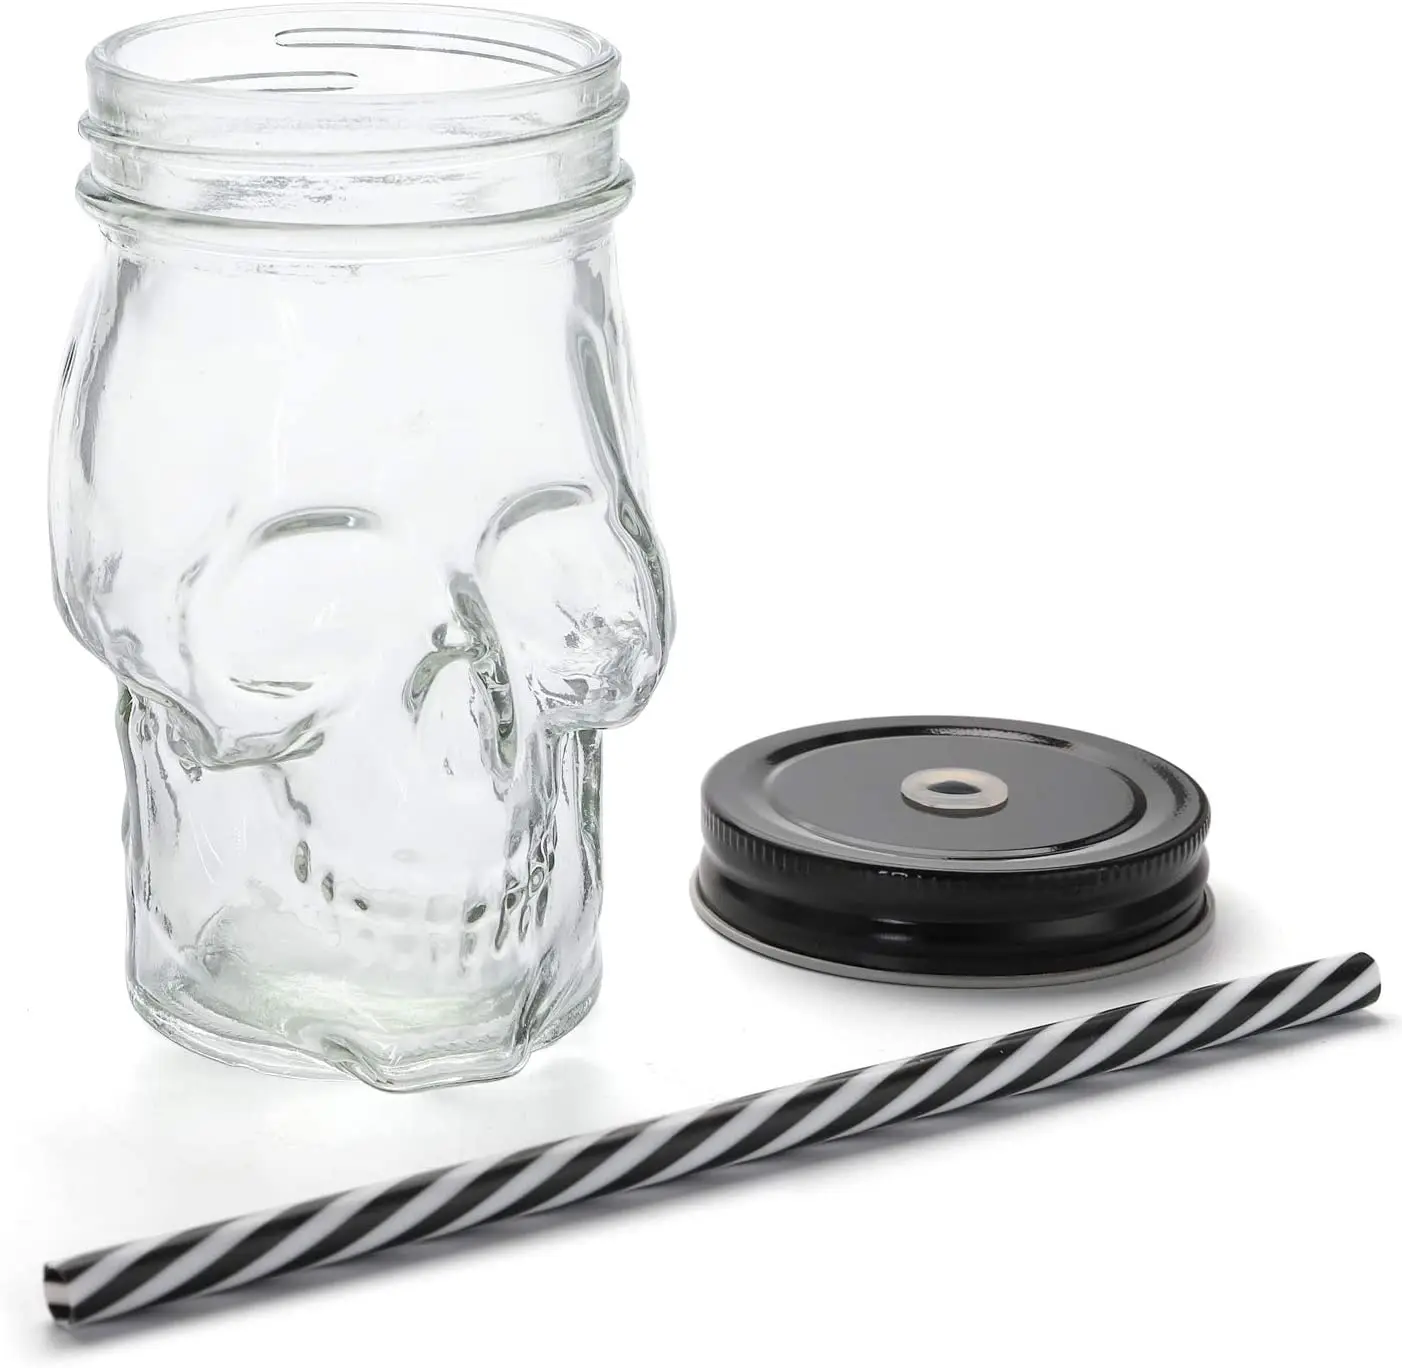 Skull Mason Jar Mug Glass Tumbler Cup with Cover and Straw 16oz Set of 2 